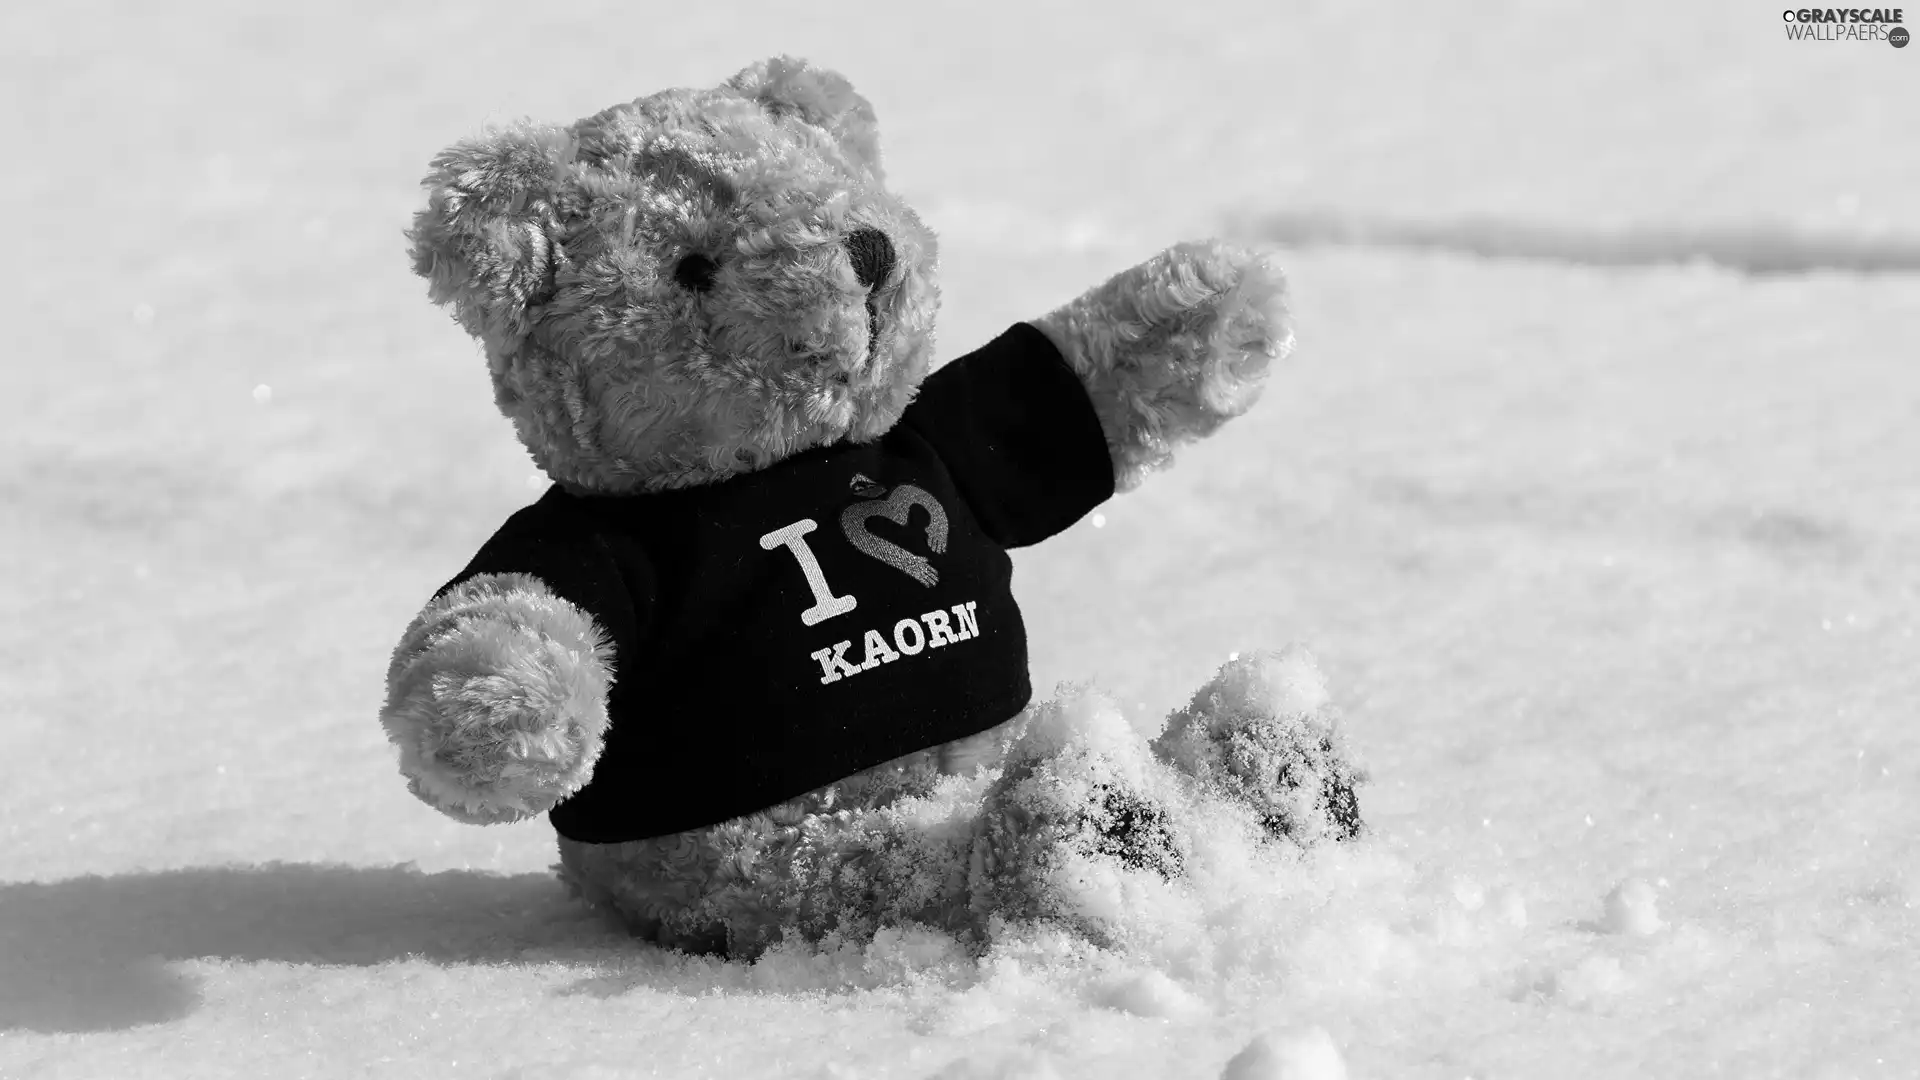 teddy bear, tunic, snow, Plush